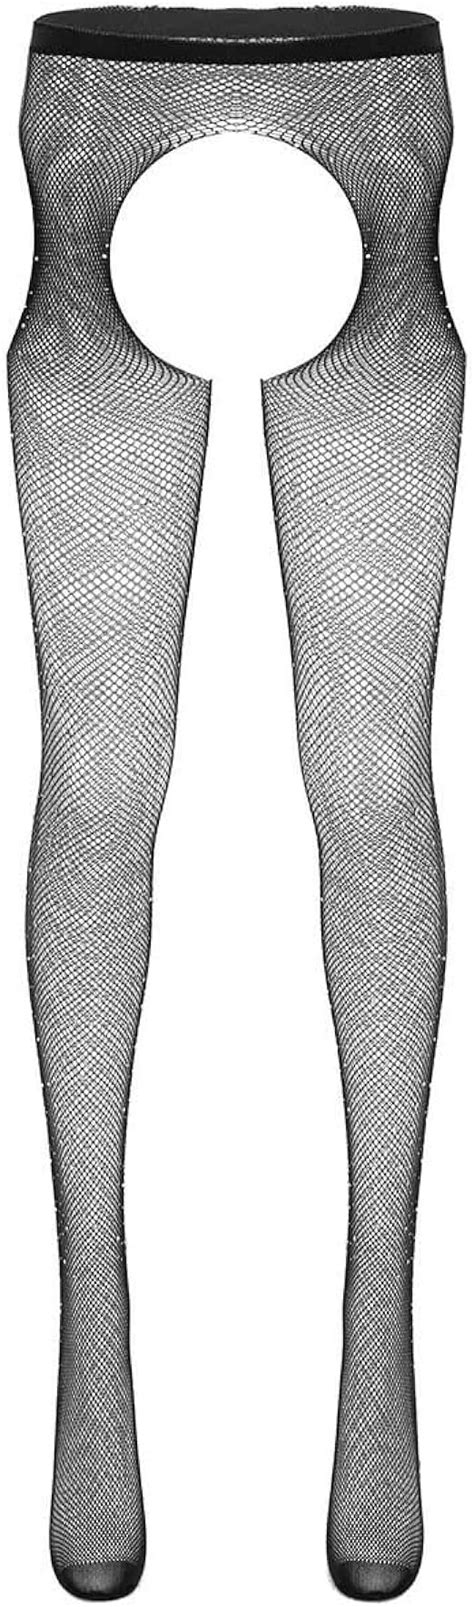 Hosiery And Socks Women 8d Oil Shiny Glossy Pantyhose Body Stockings